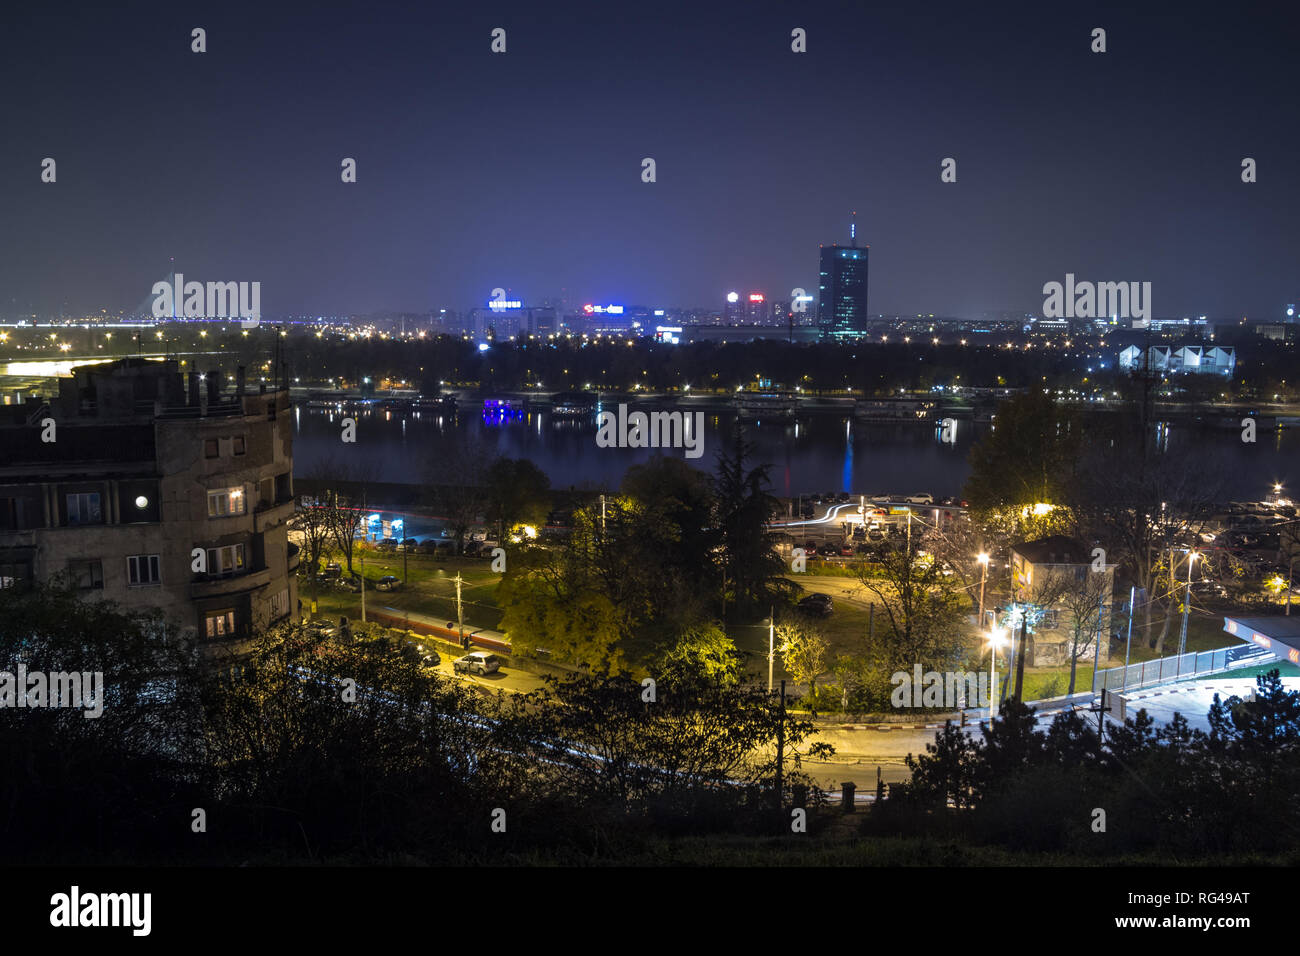 BELGRADE, SERBIA - NOVEMBER 8, 2014: Skyline of New Belgrade (Novi Beograd) seen by night from the Kalemegdan fortress. The main landmarks of the dist Stock Photo